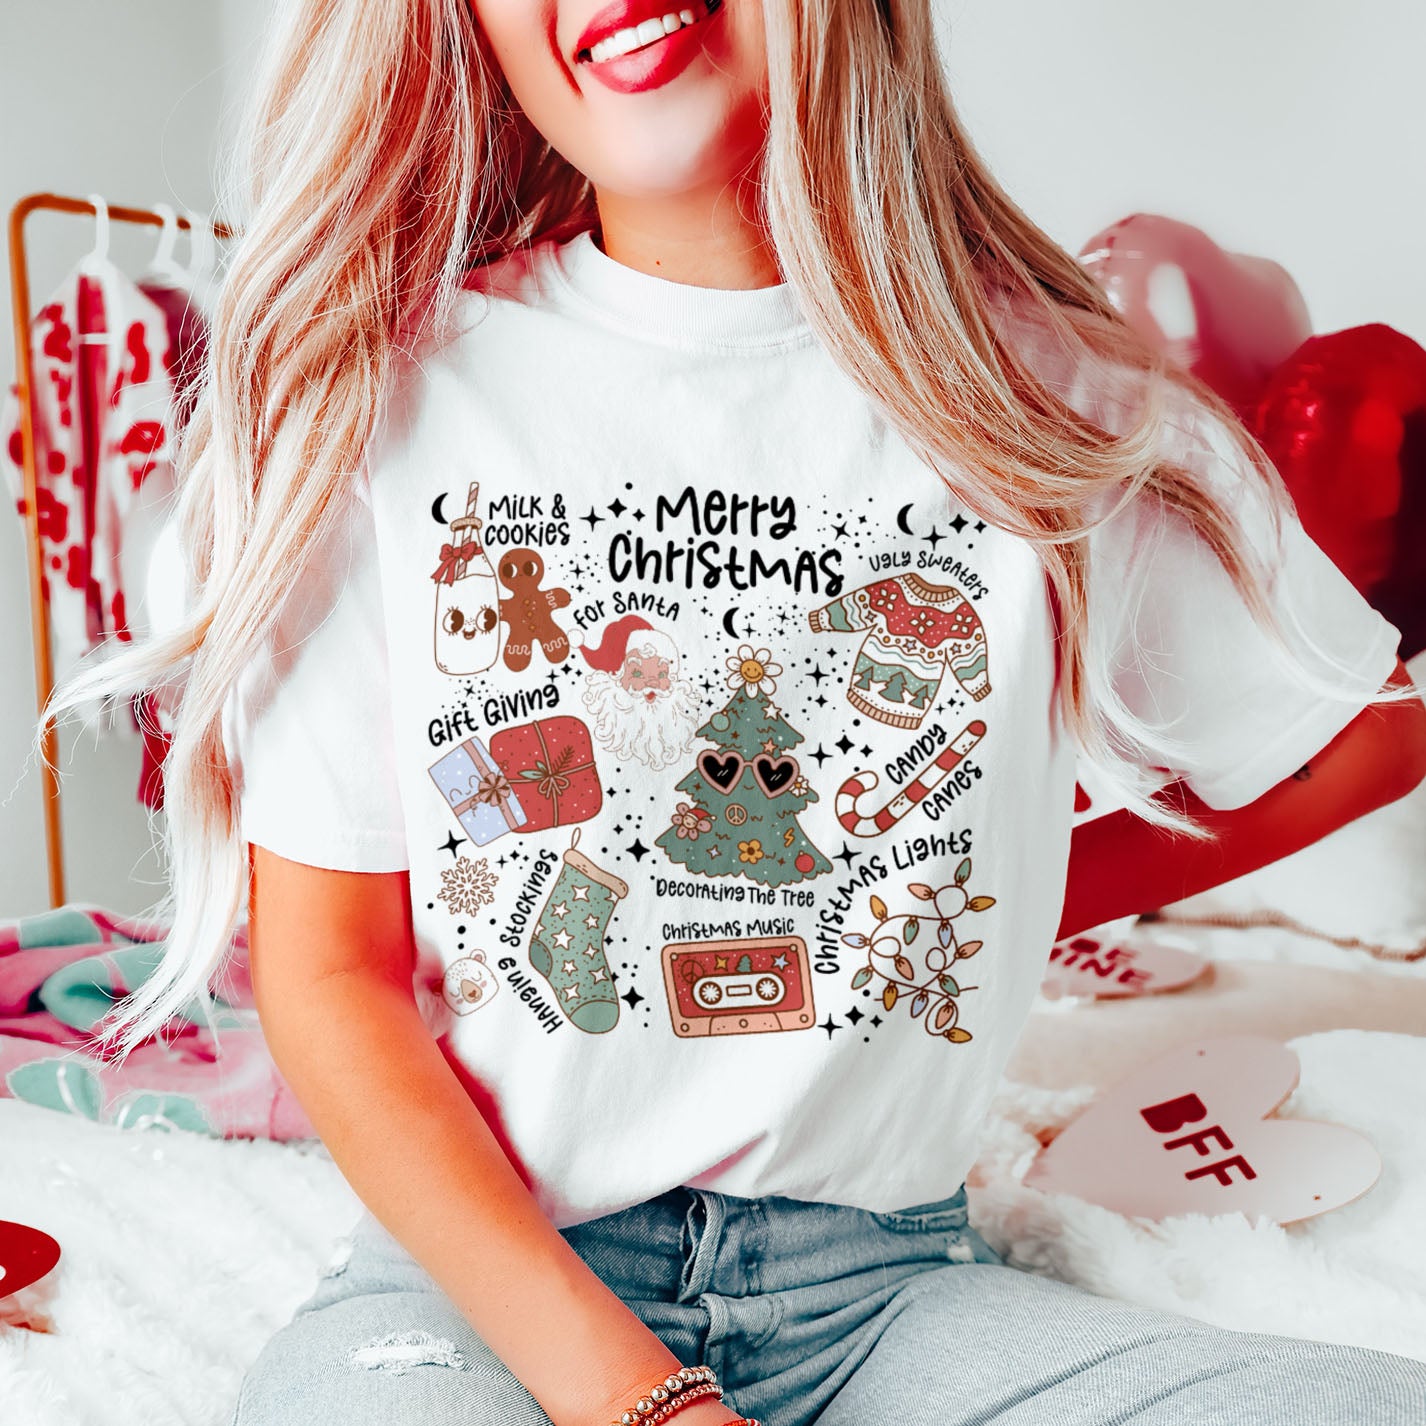 Retro Christmas T-skjorte Jul